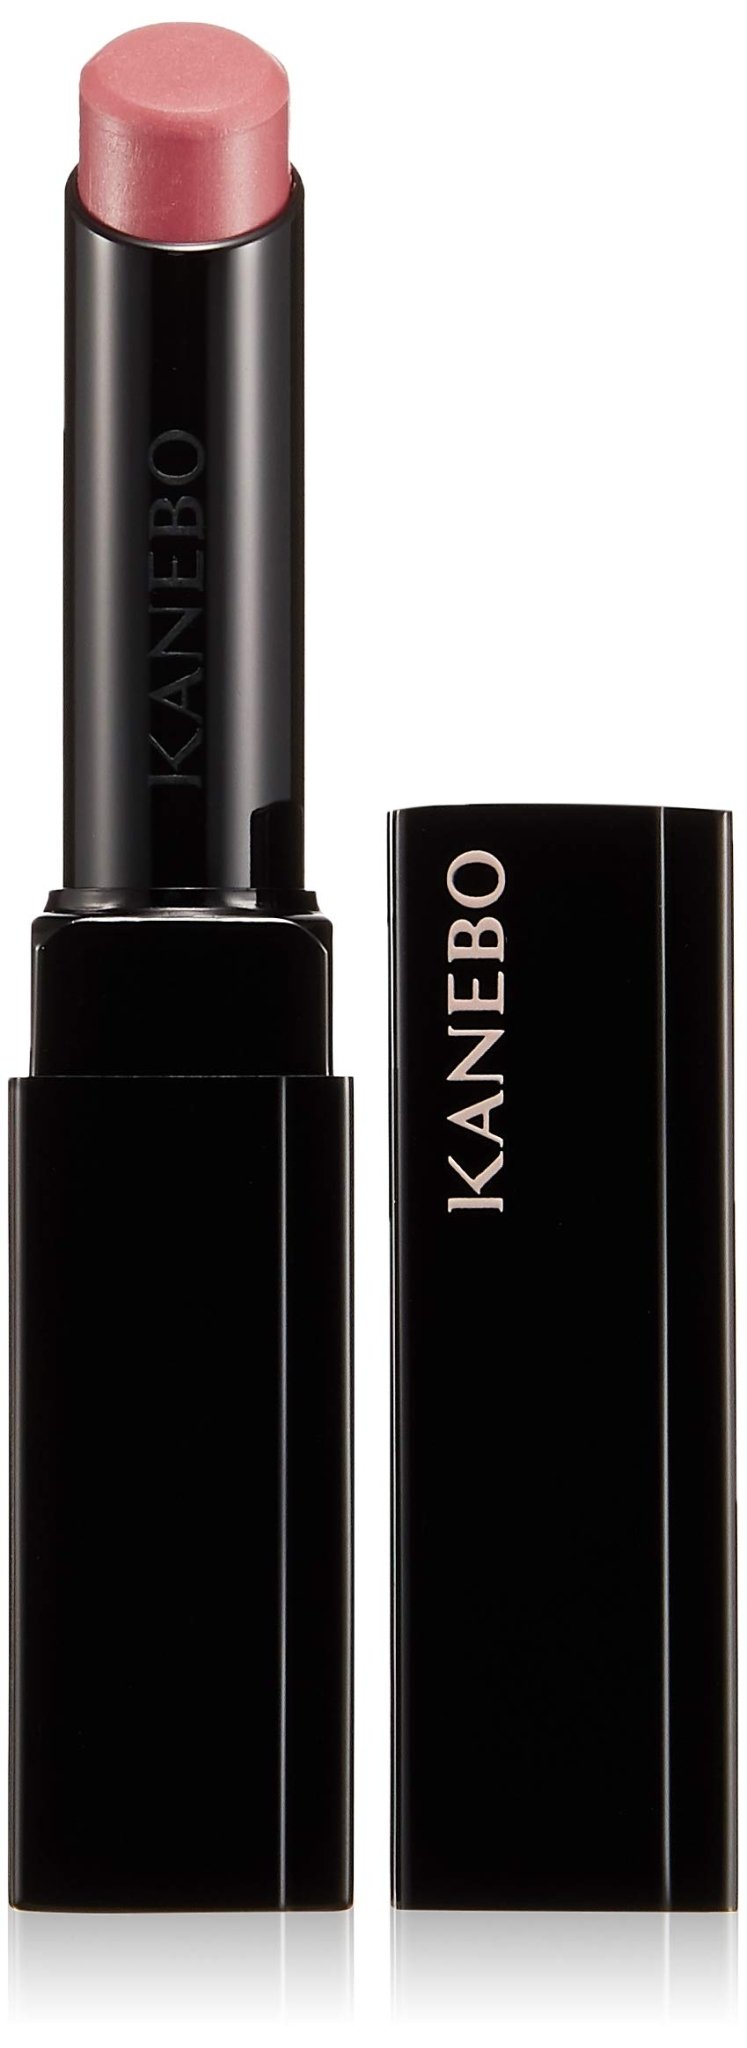 Kanebo Smoky Red Lipstick Wearing Keep Rouge 06 Long - Lasting Formula